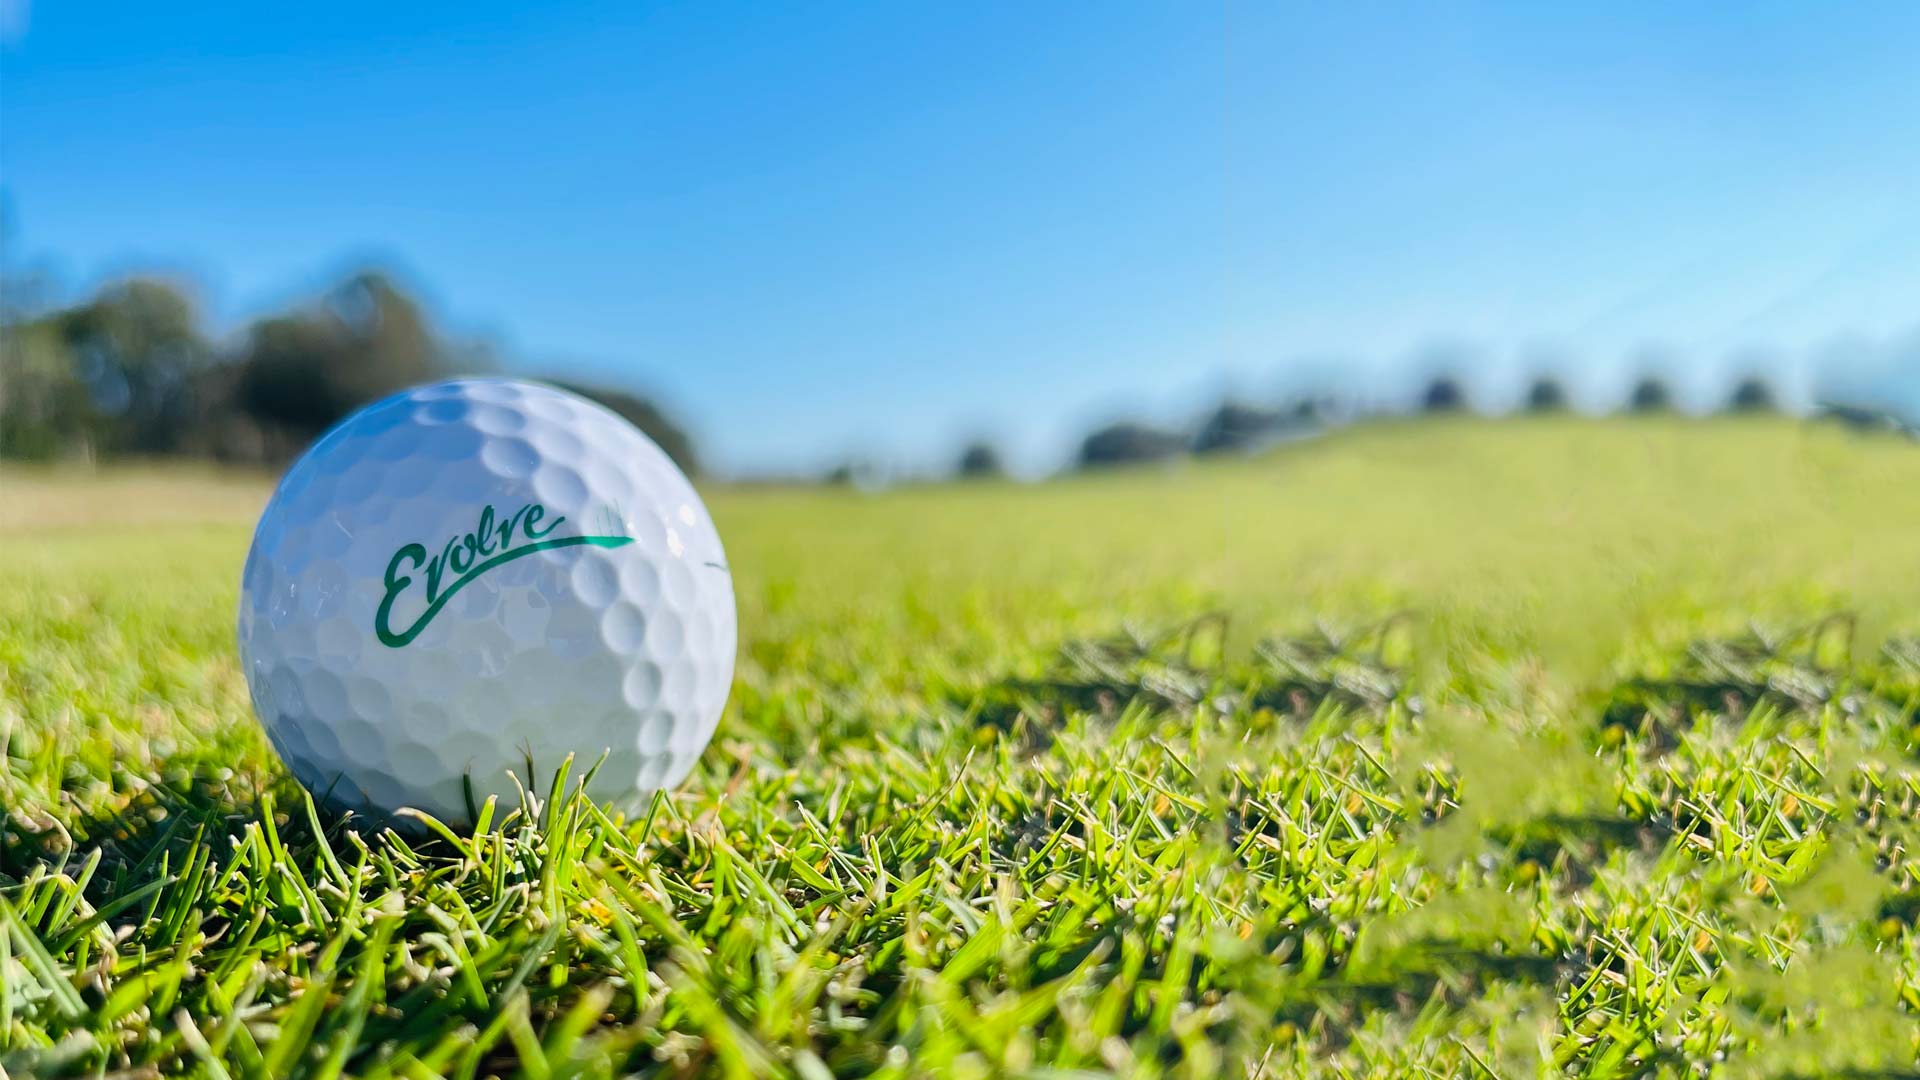 Evolve Contracting custom golf ball in grass.